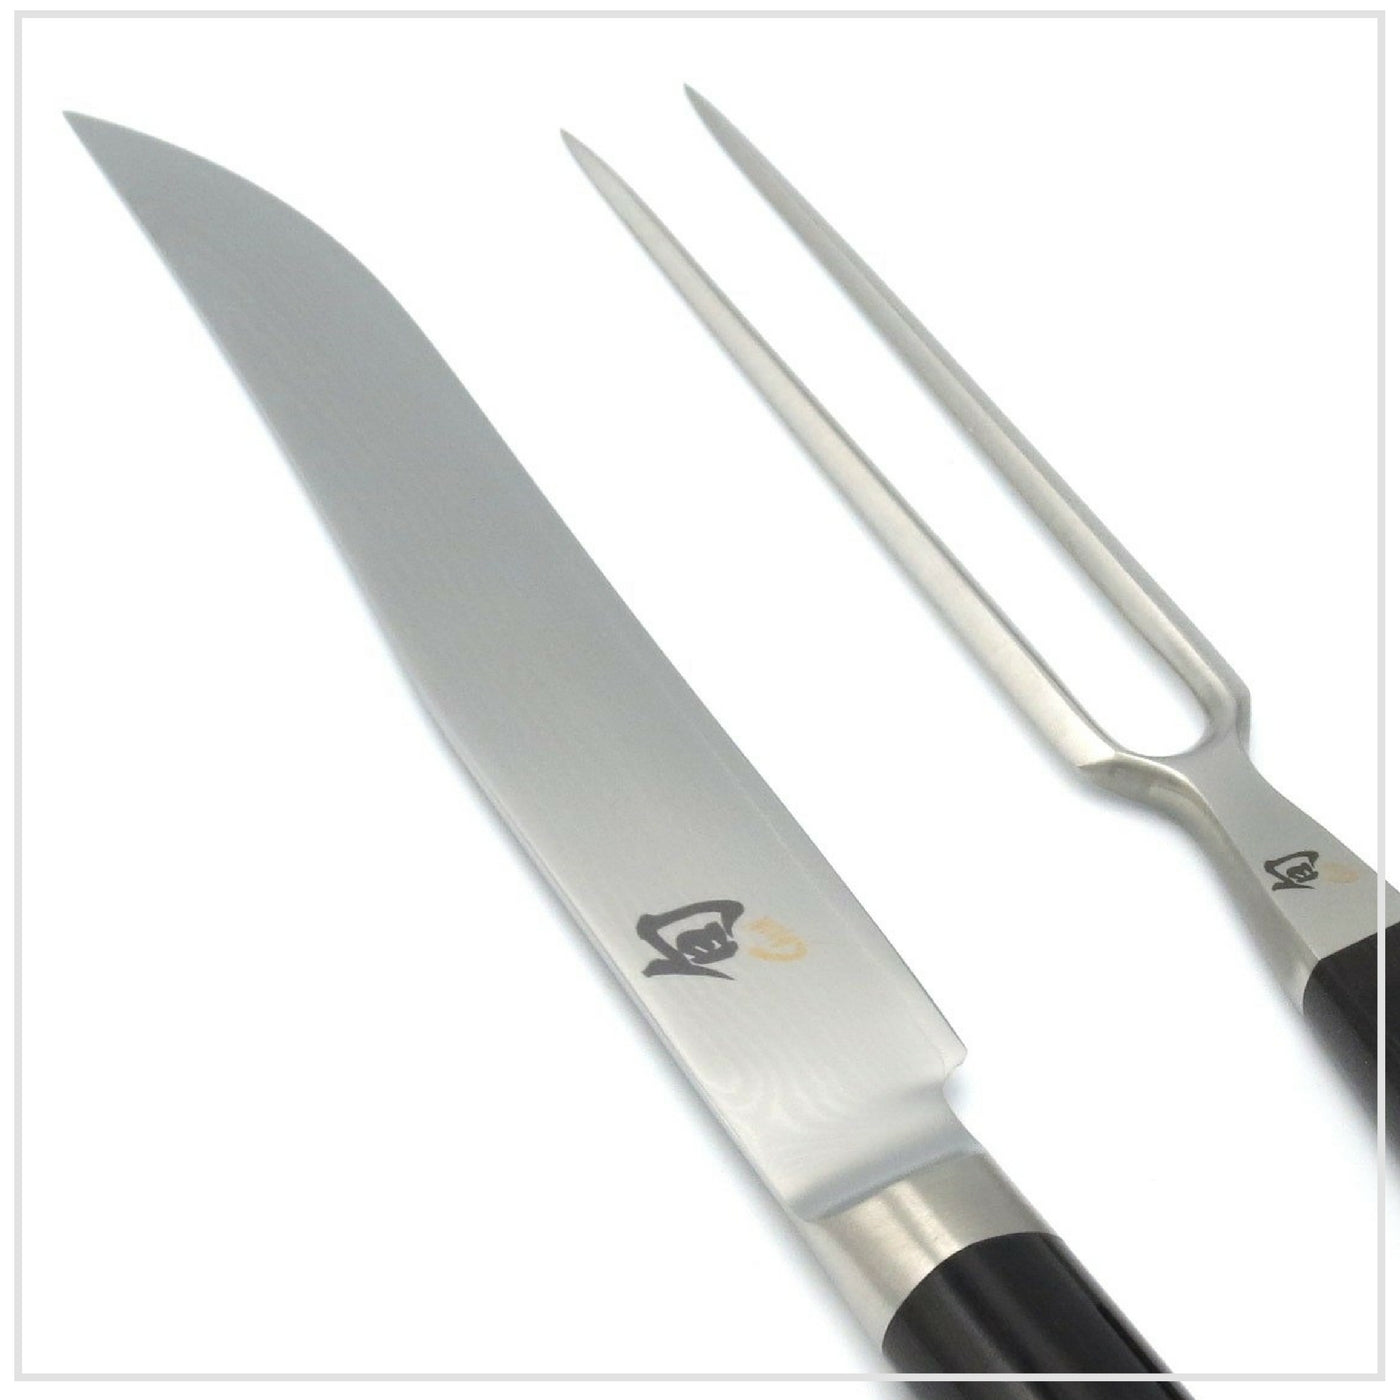 KAI SHUN Carving Knife / Fork Set